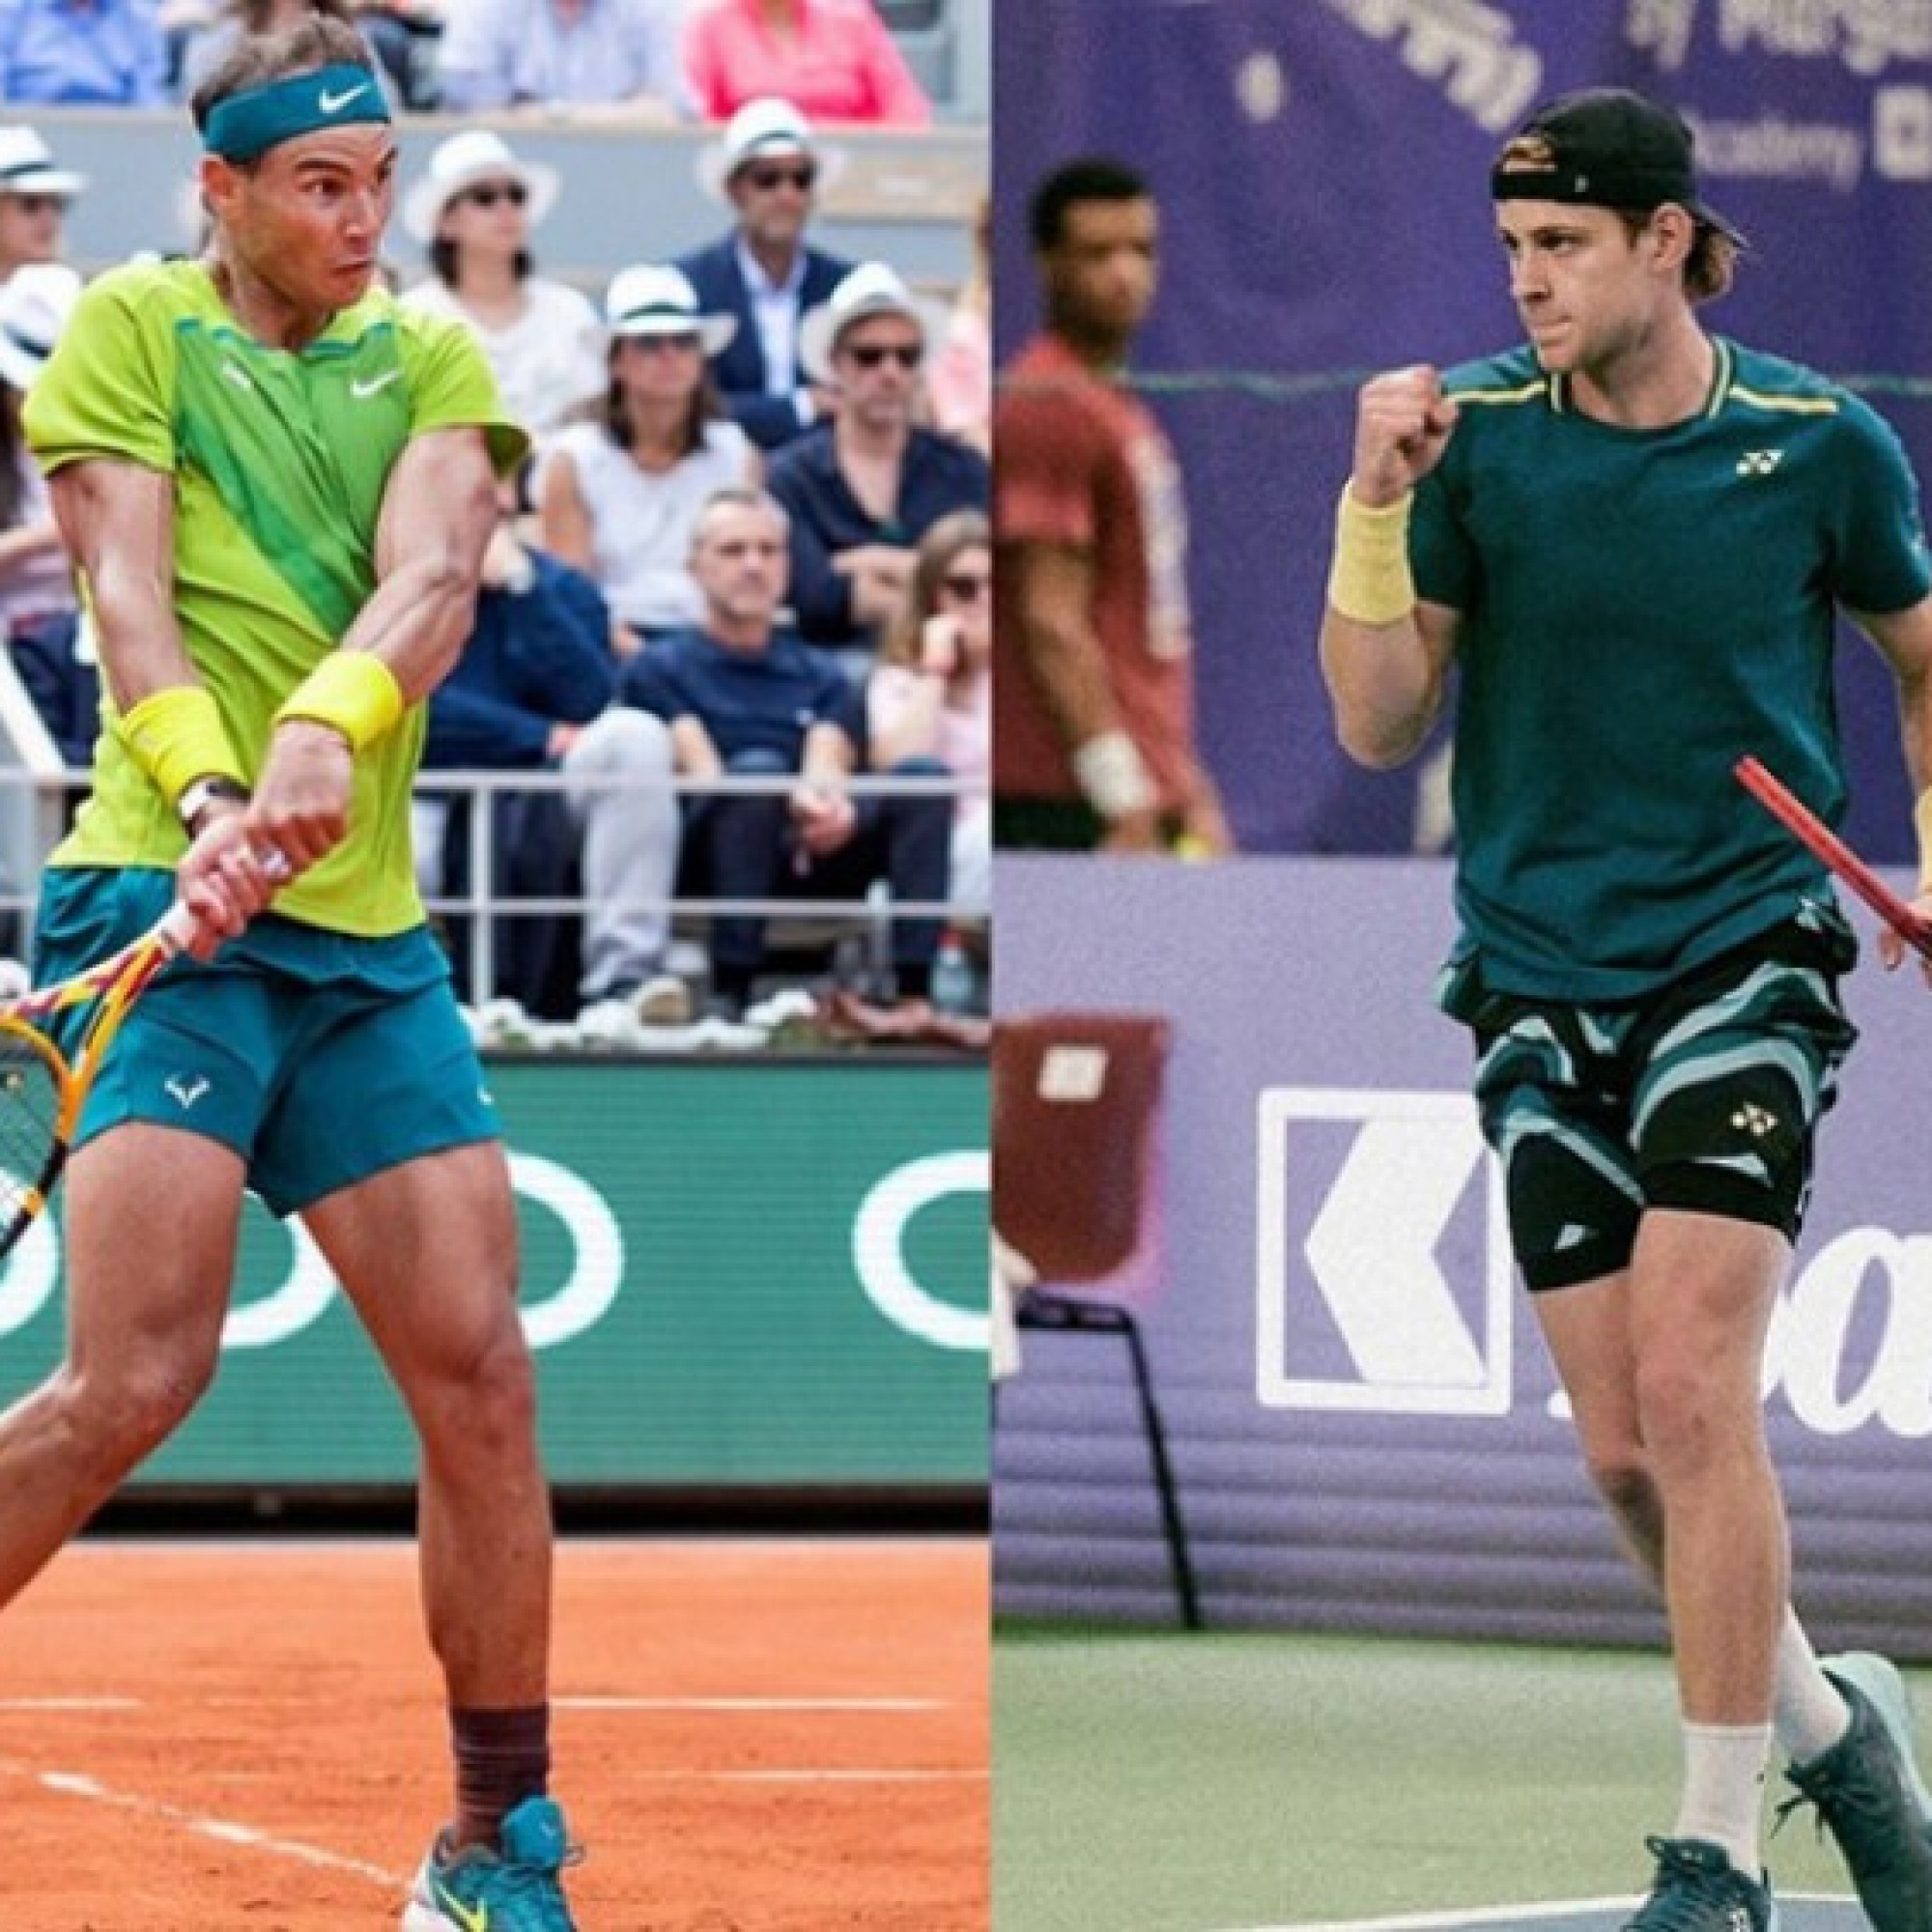  - Trực tiếp tennis Zizou Bergs - Nadal: "Vua đất nện" đoạt break-point ở set 3 (Rome Open)